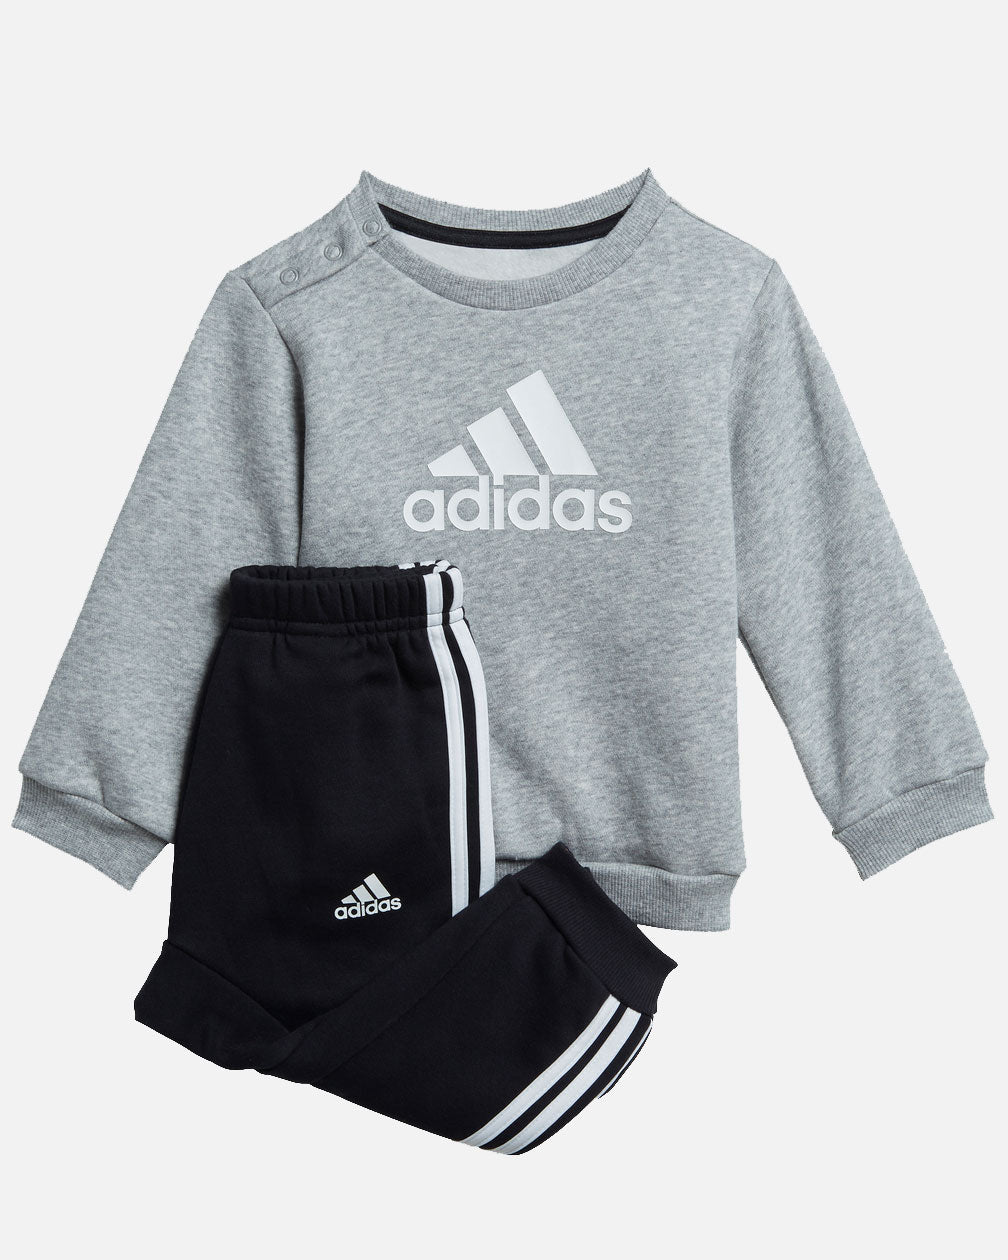 Adidas Baby Tracksuit Set - Grey/Black